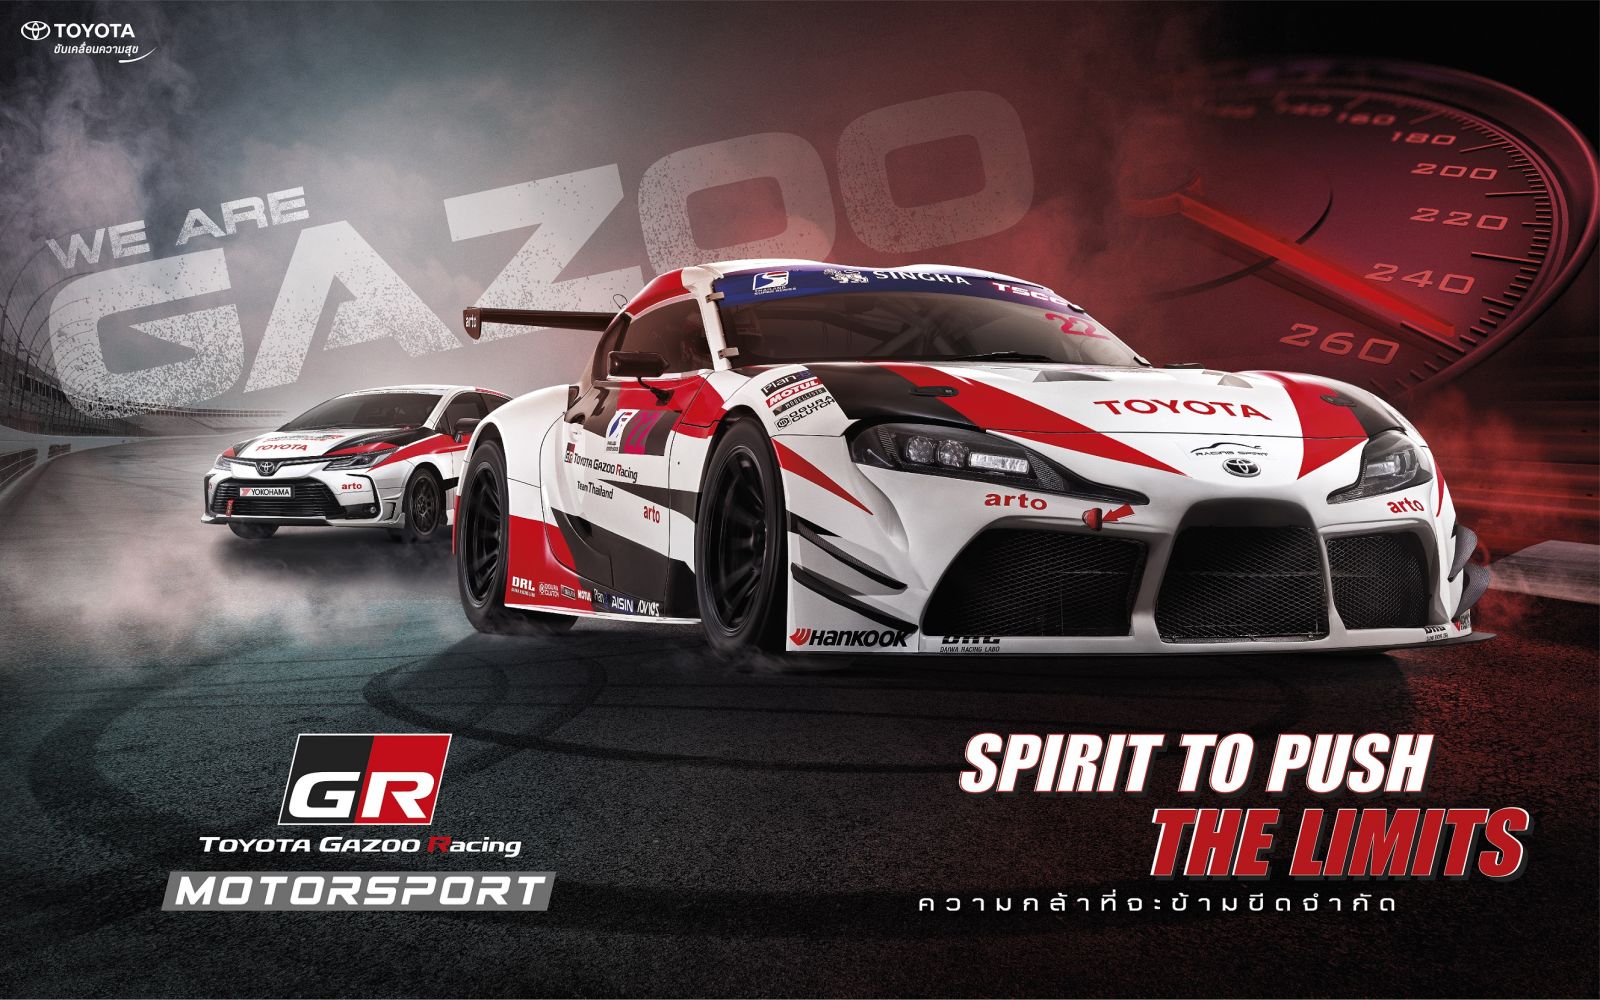 Toyota Gazoo Racing Motorsport 2021 ความกล้าที่จะข้ามขีดจำกัด...Spirit